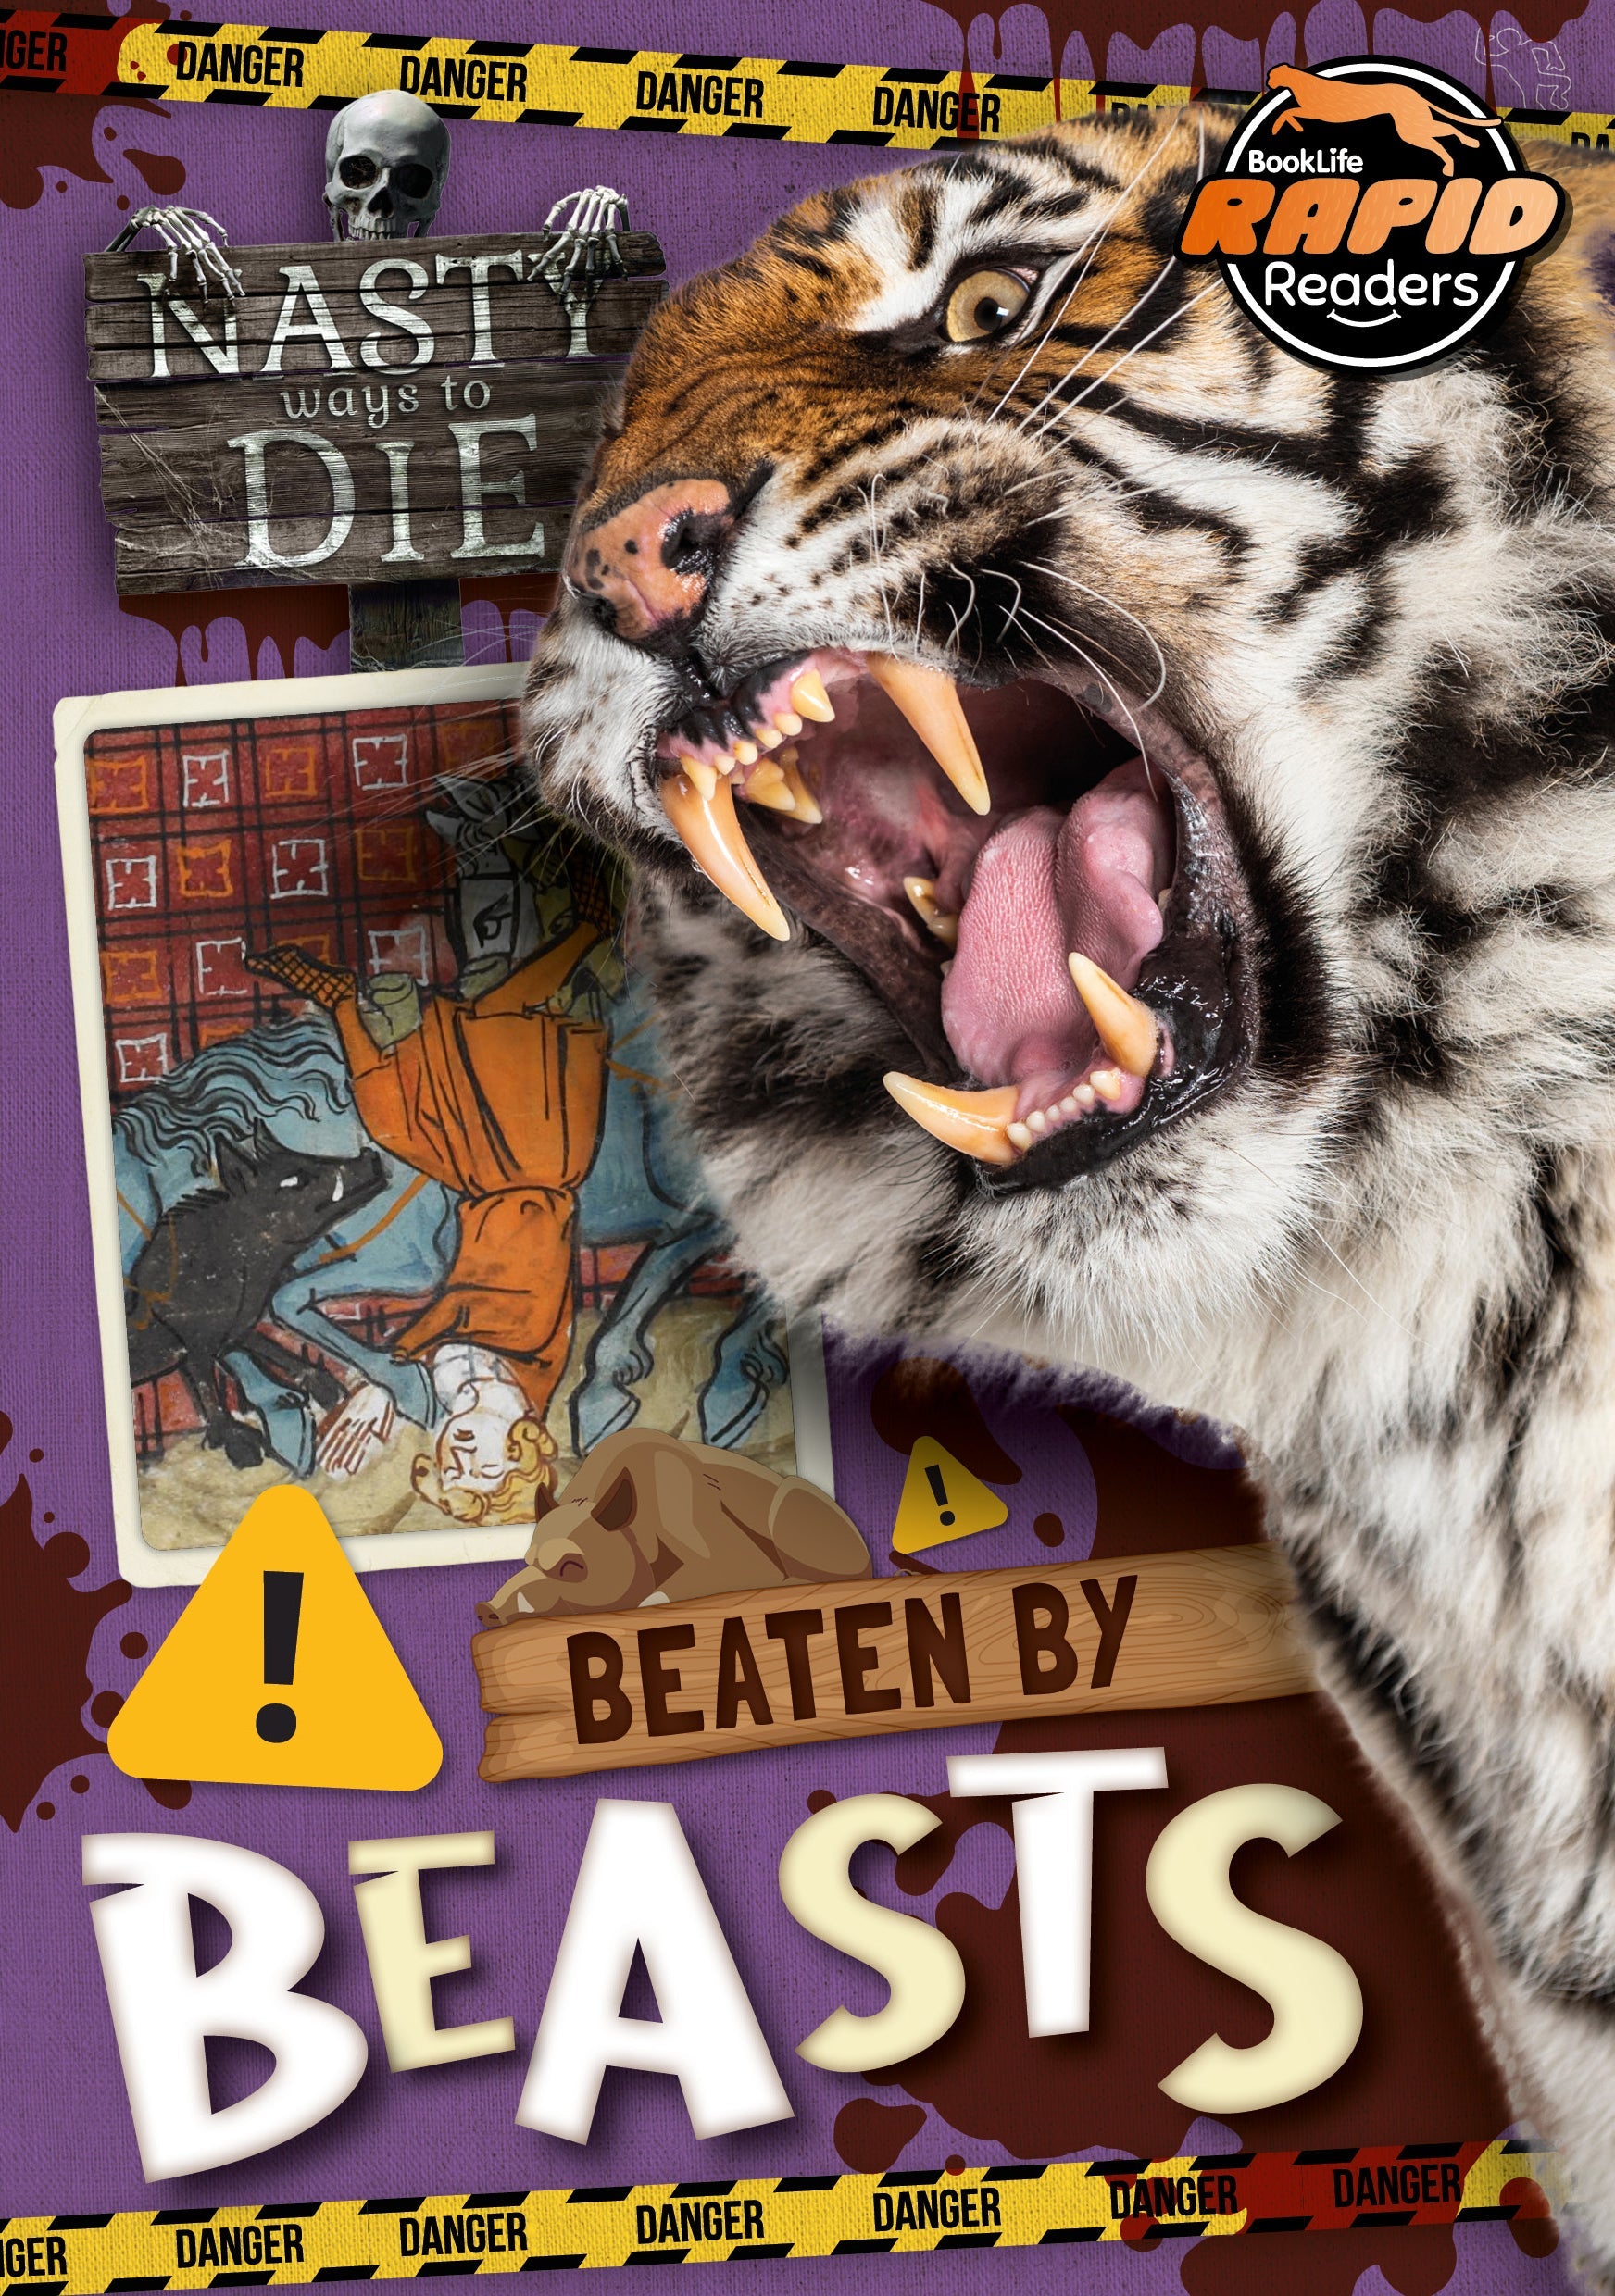 Beaten by Beasts (Hi-Lo)